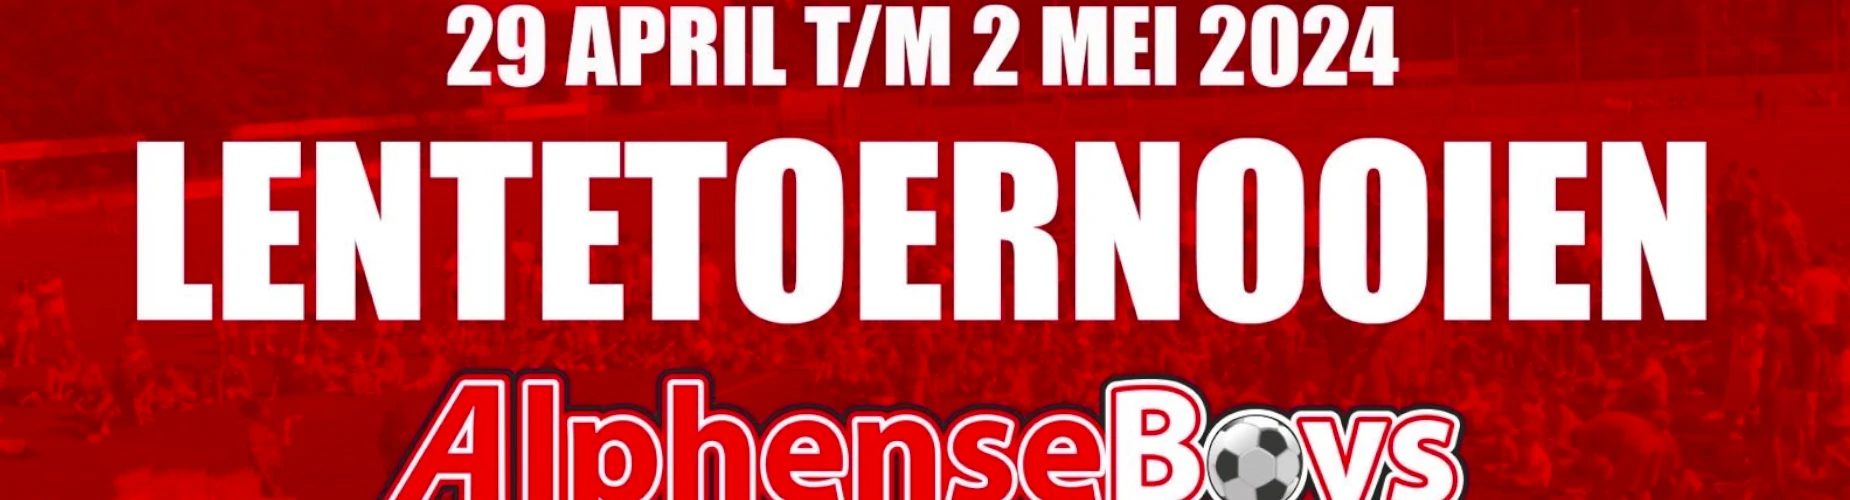 Banner - JO13 - Lentetoernooi Alphense Boys - Alphense Boys - Alphen aan den Rijn